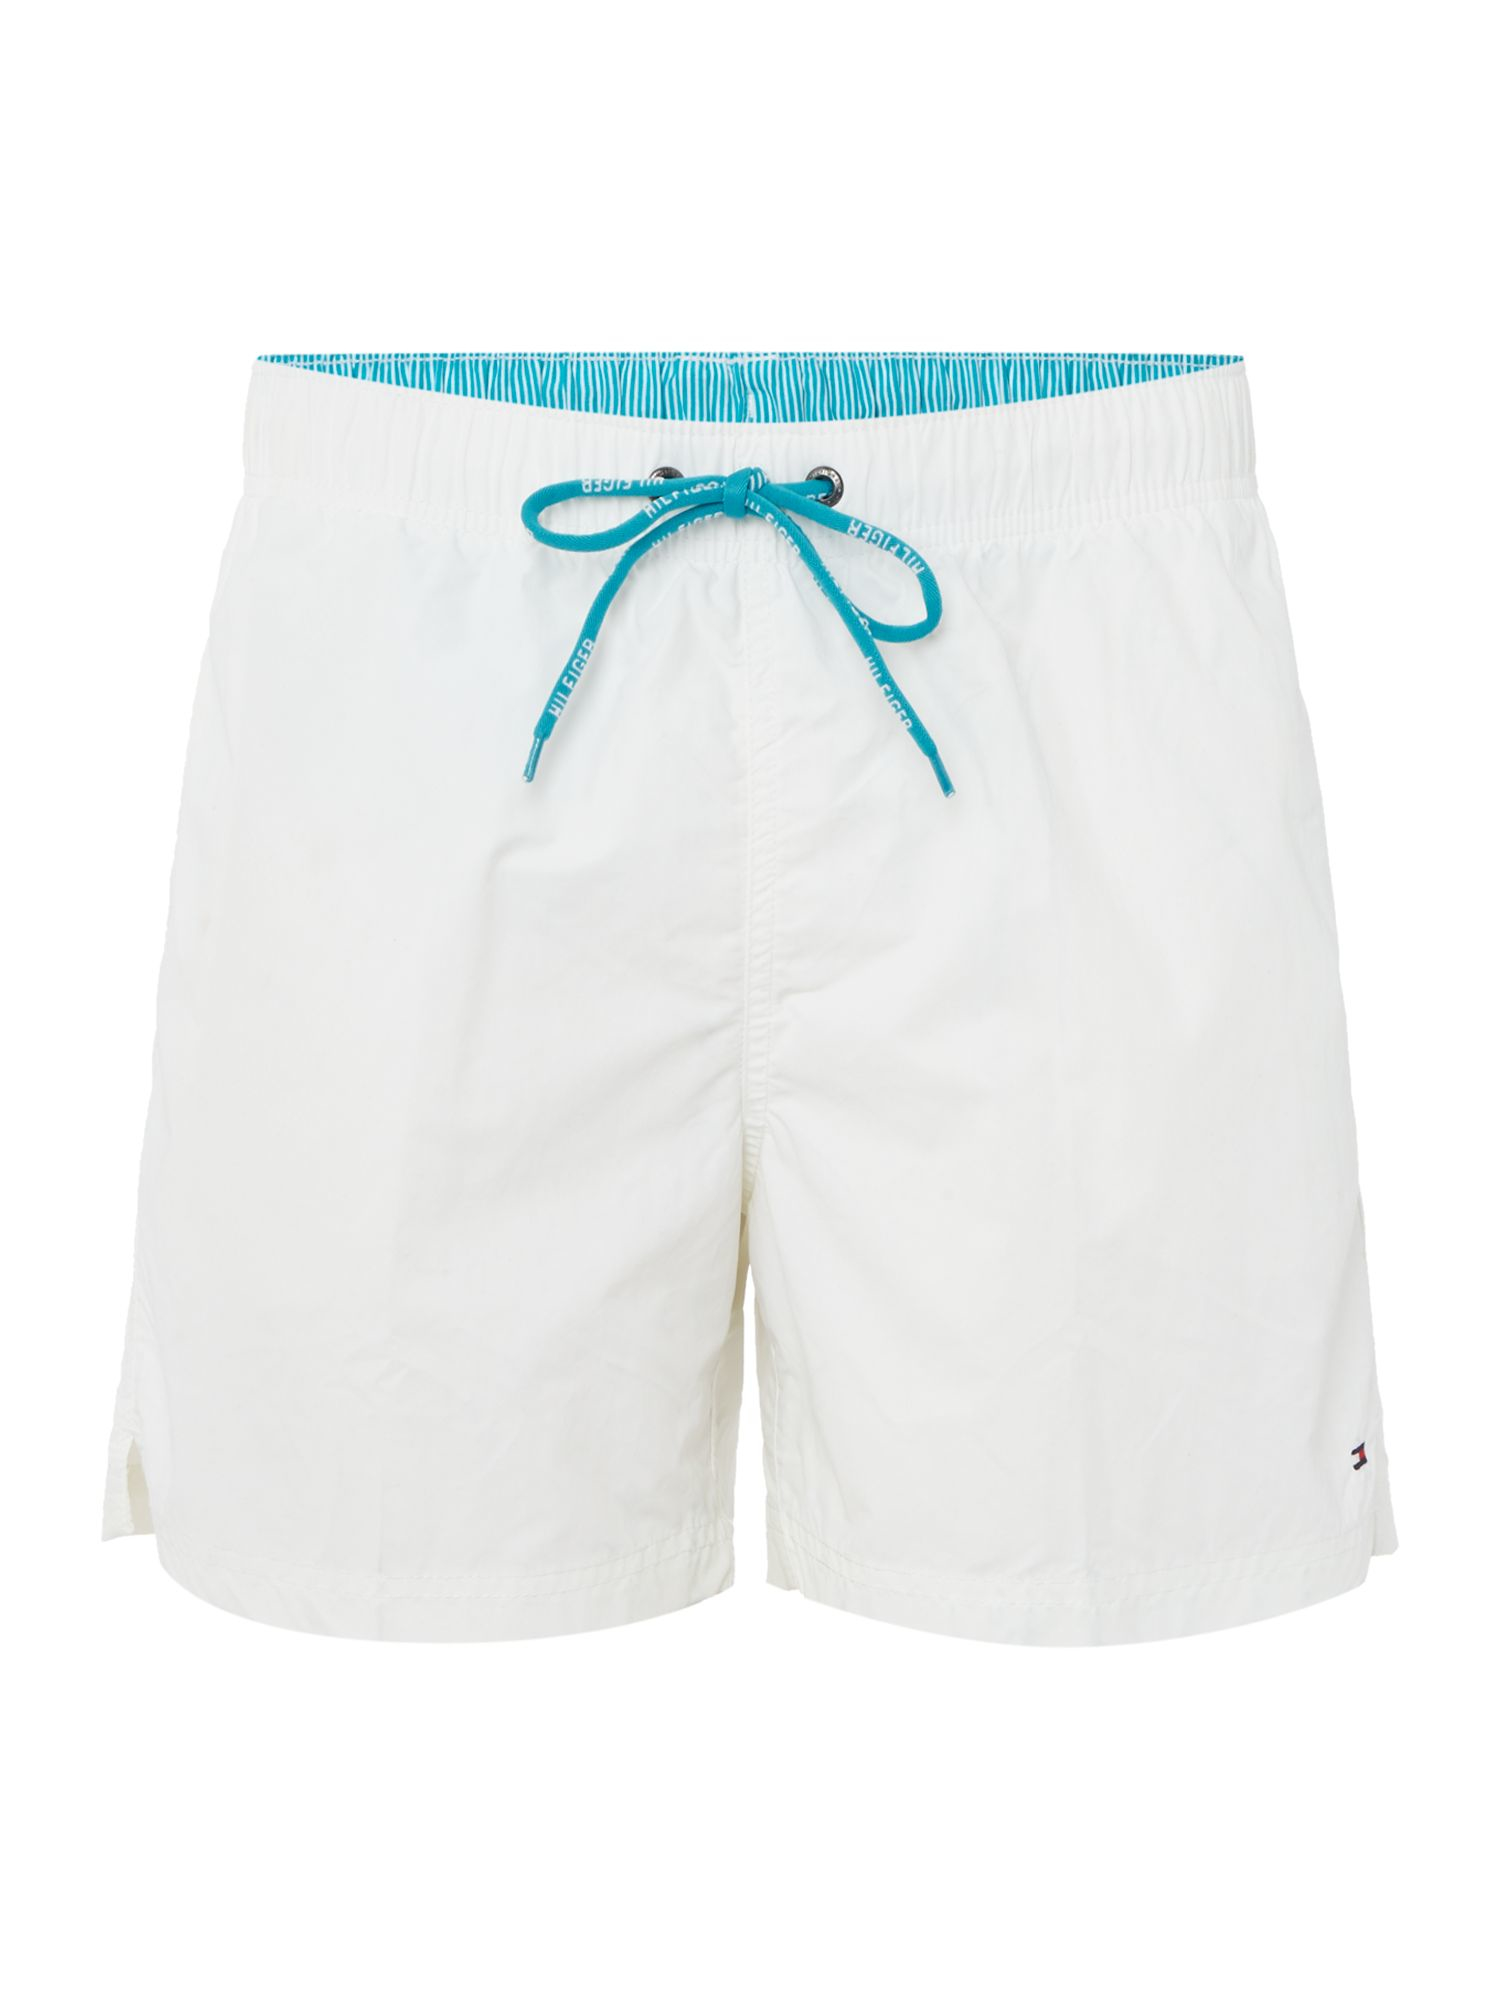 Tommy hilfiger Plain Swim Shorts in White for Men | Lyst